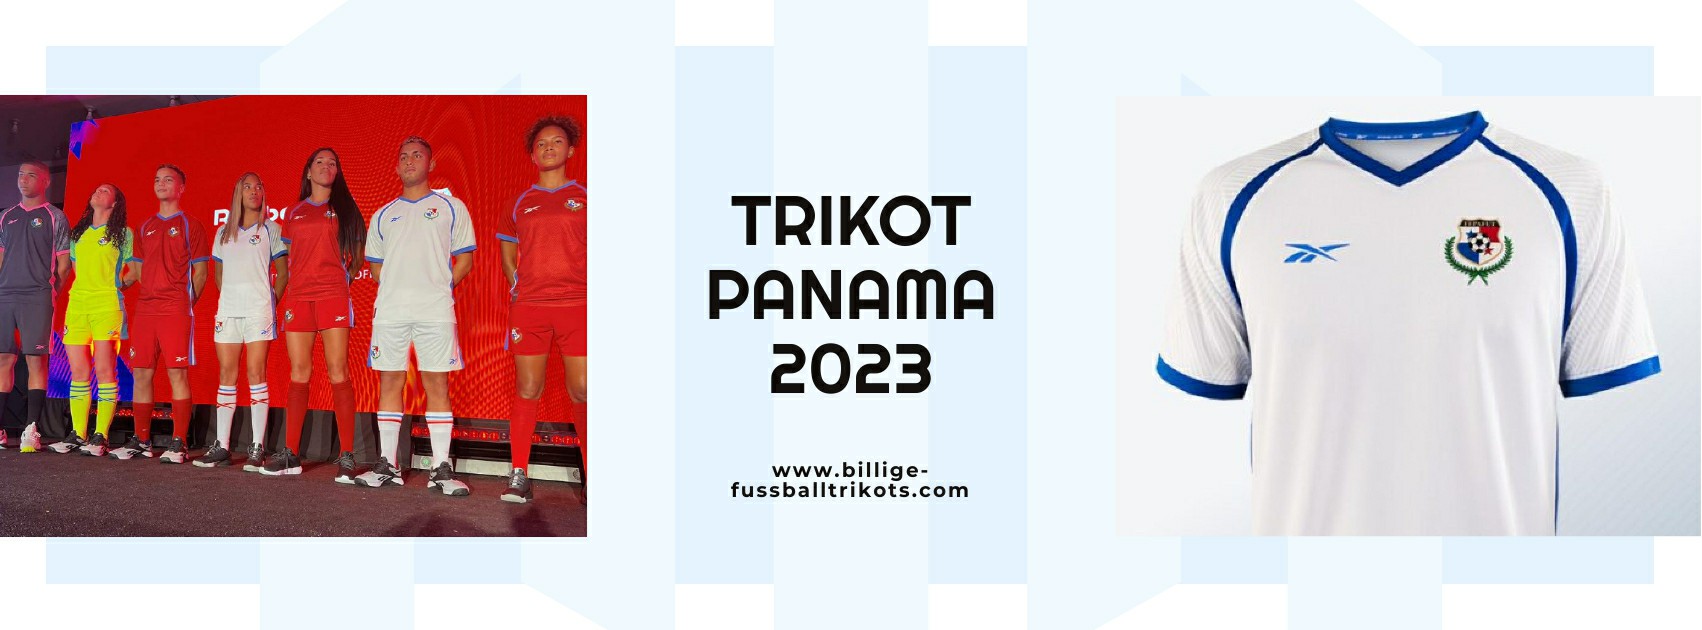 Panama Trikot 2023-2024